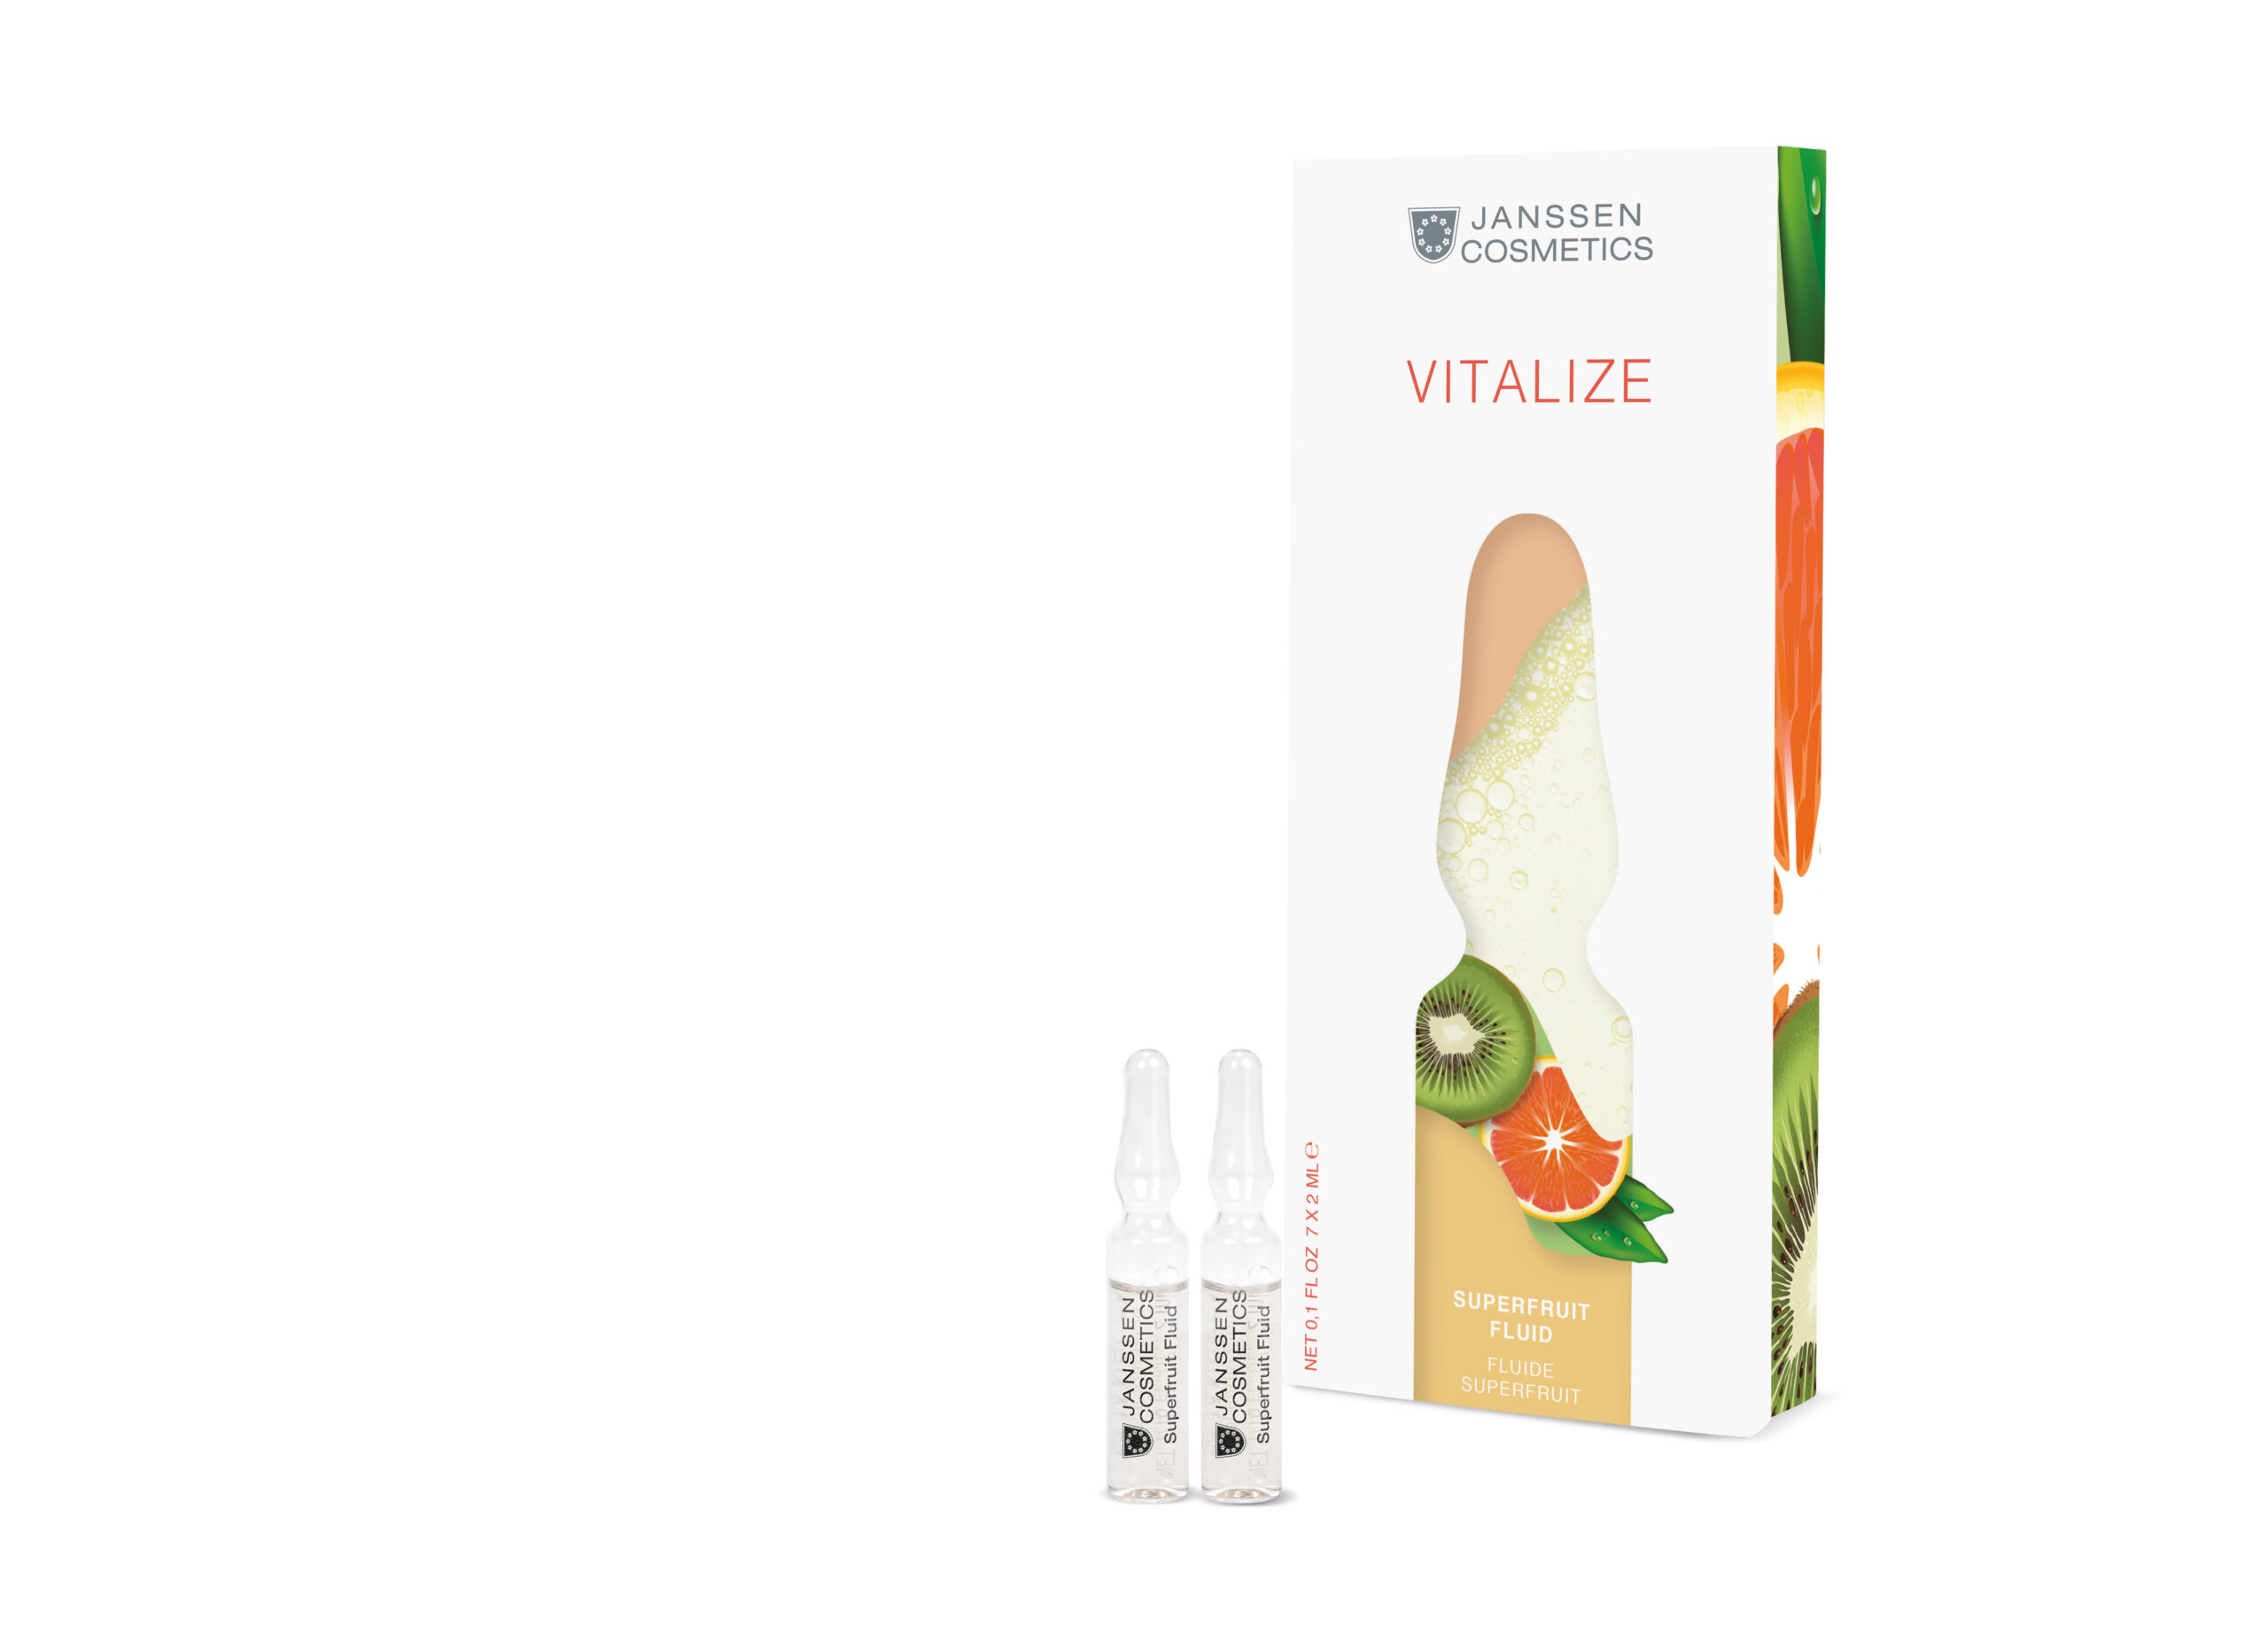 Vitalize – Superfruit Fluid 7x 2ml